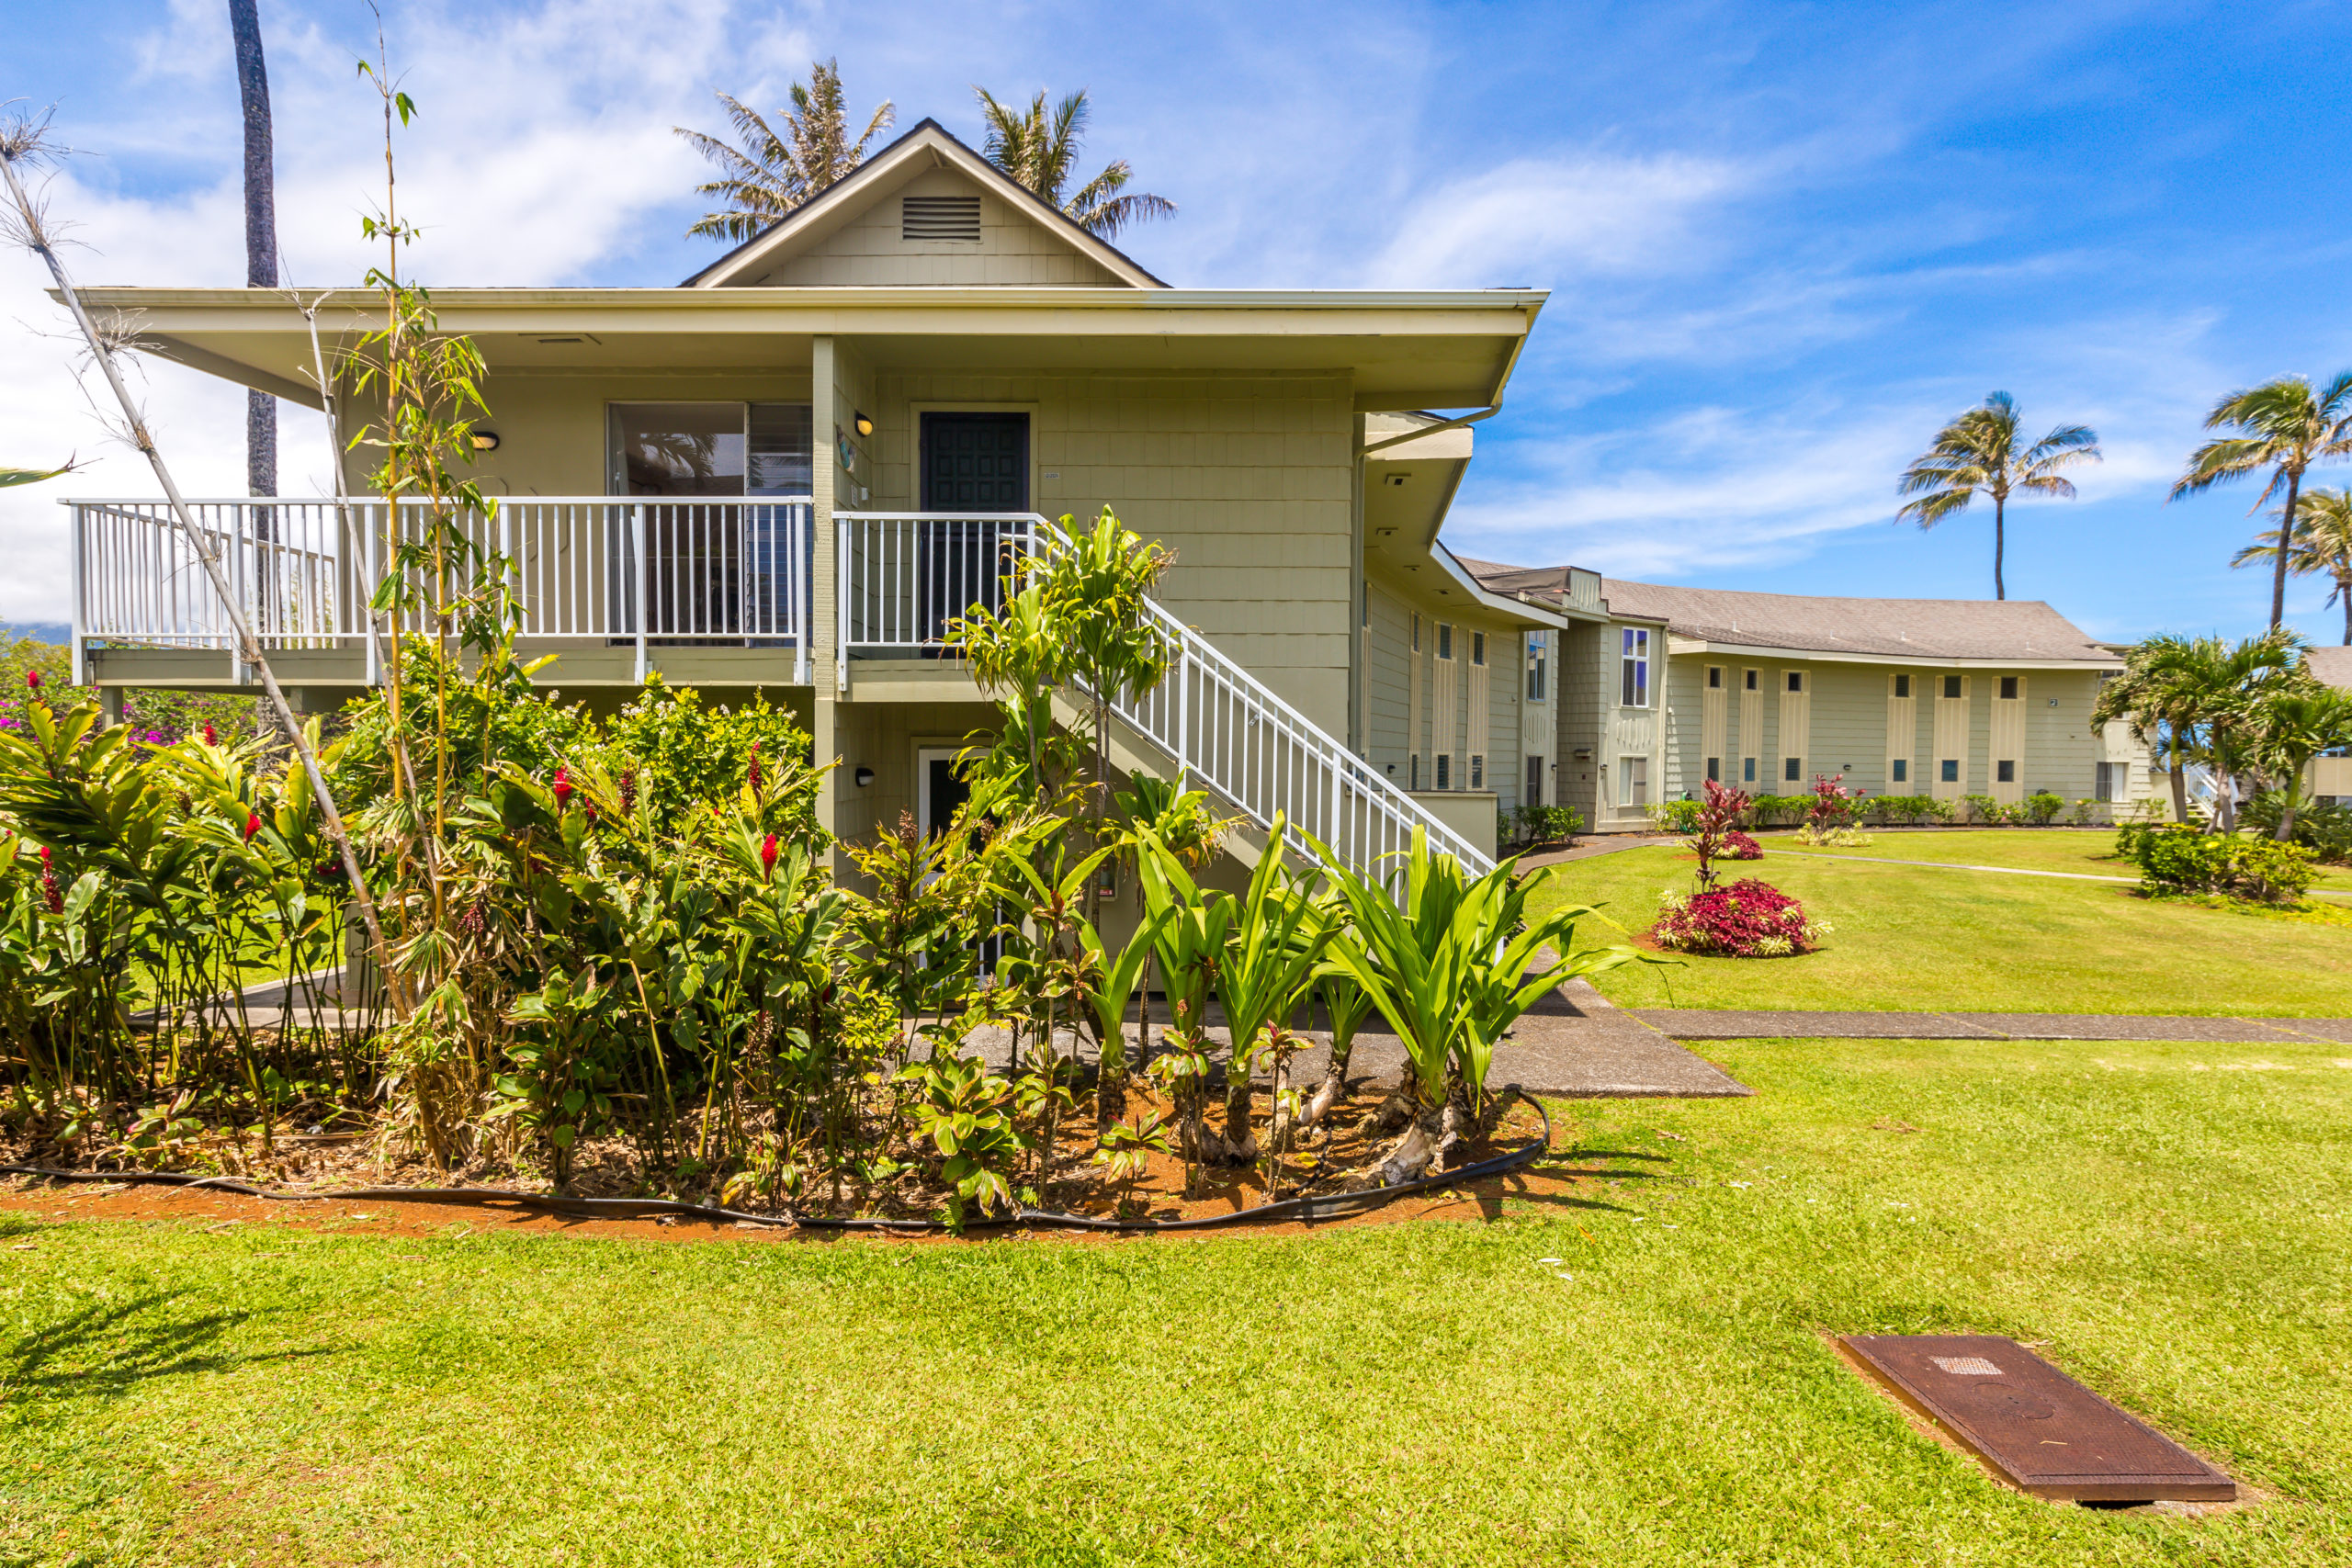 Hawaii Rental Property Walkthrough: Ali‘i Kai 2201